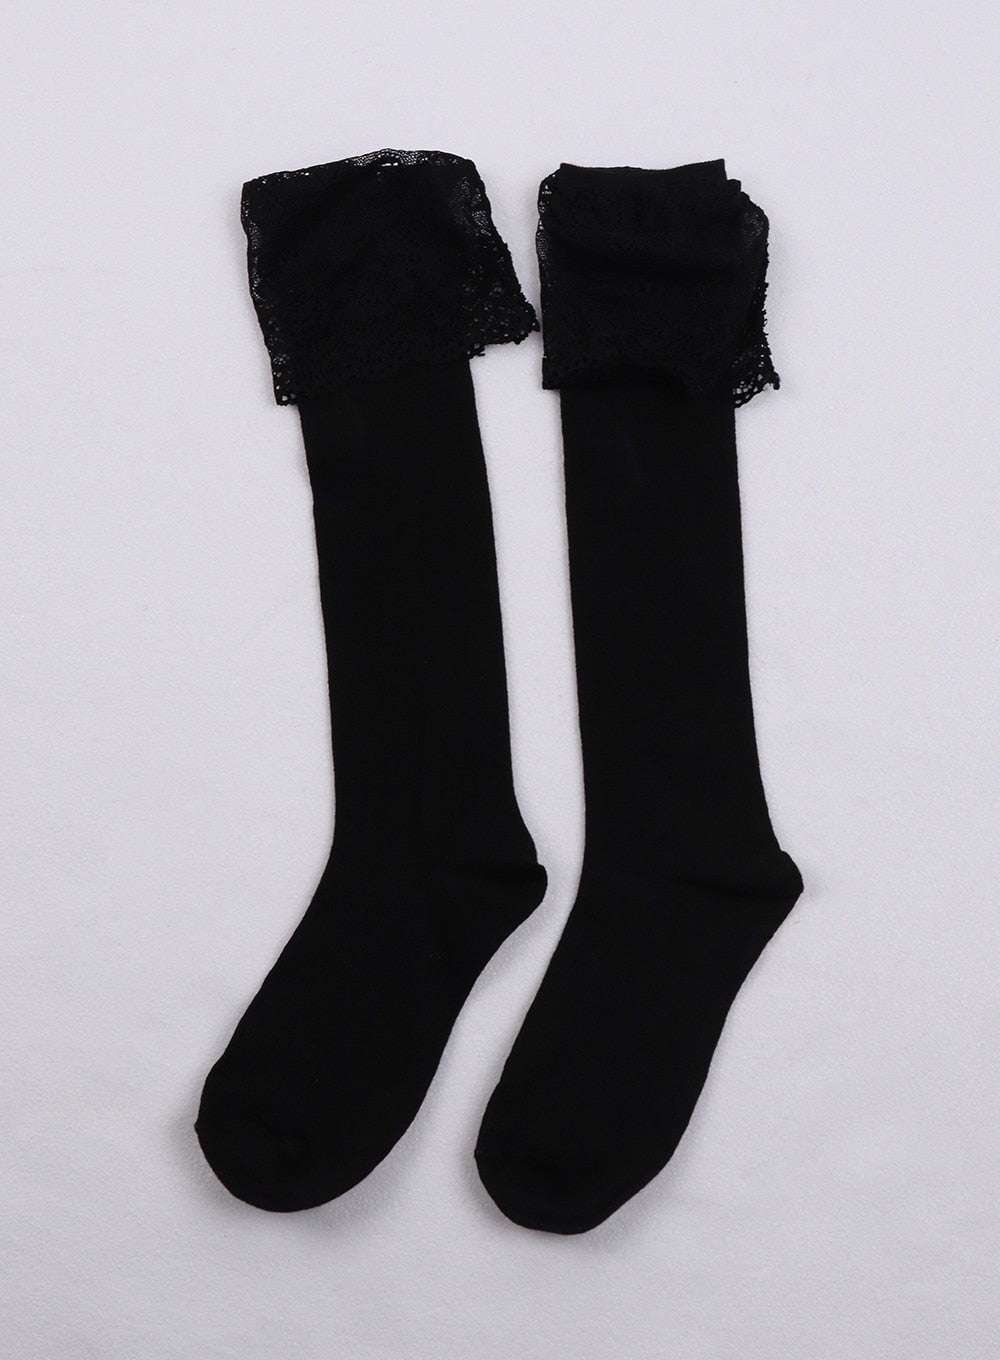 lace-trim-over-calf-socks-cj423